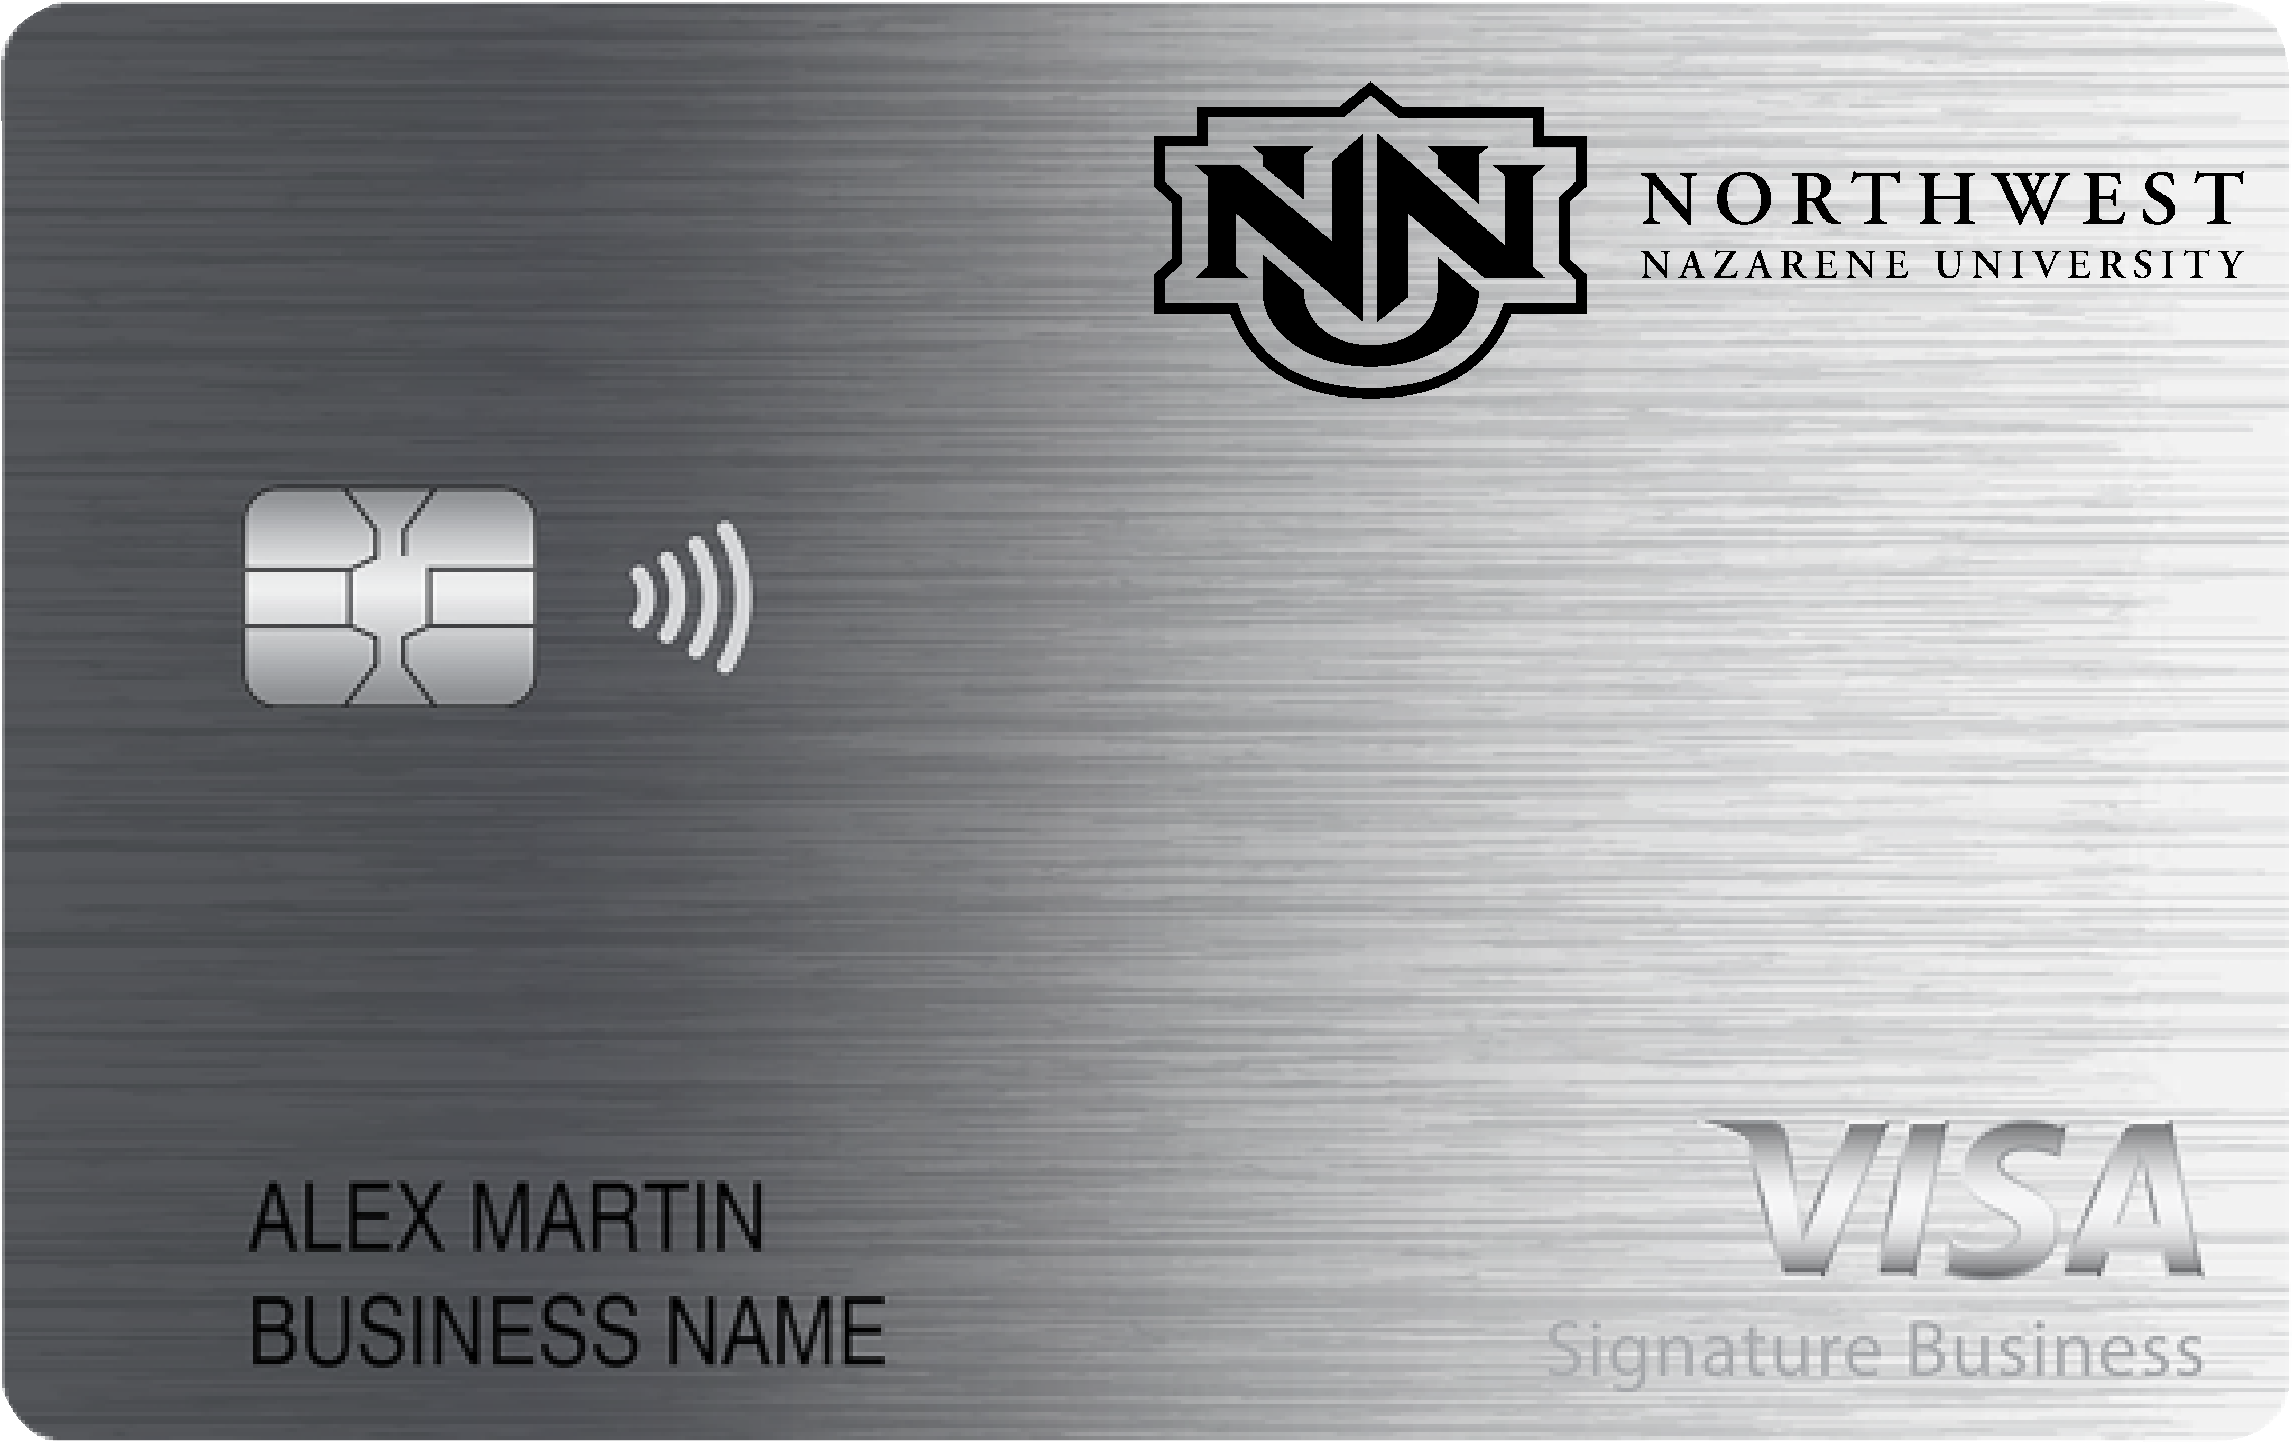 Northwest Nazarene University Smart Business Rewards Card